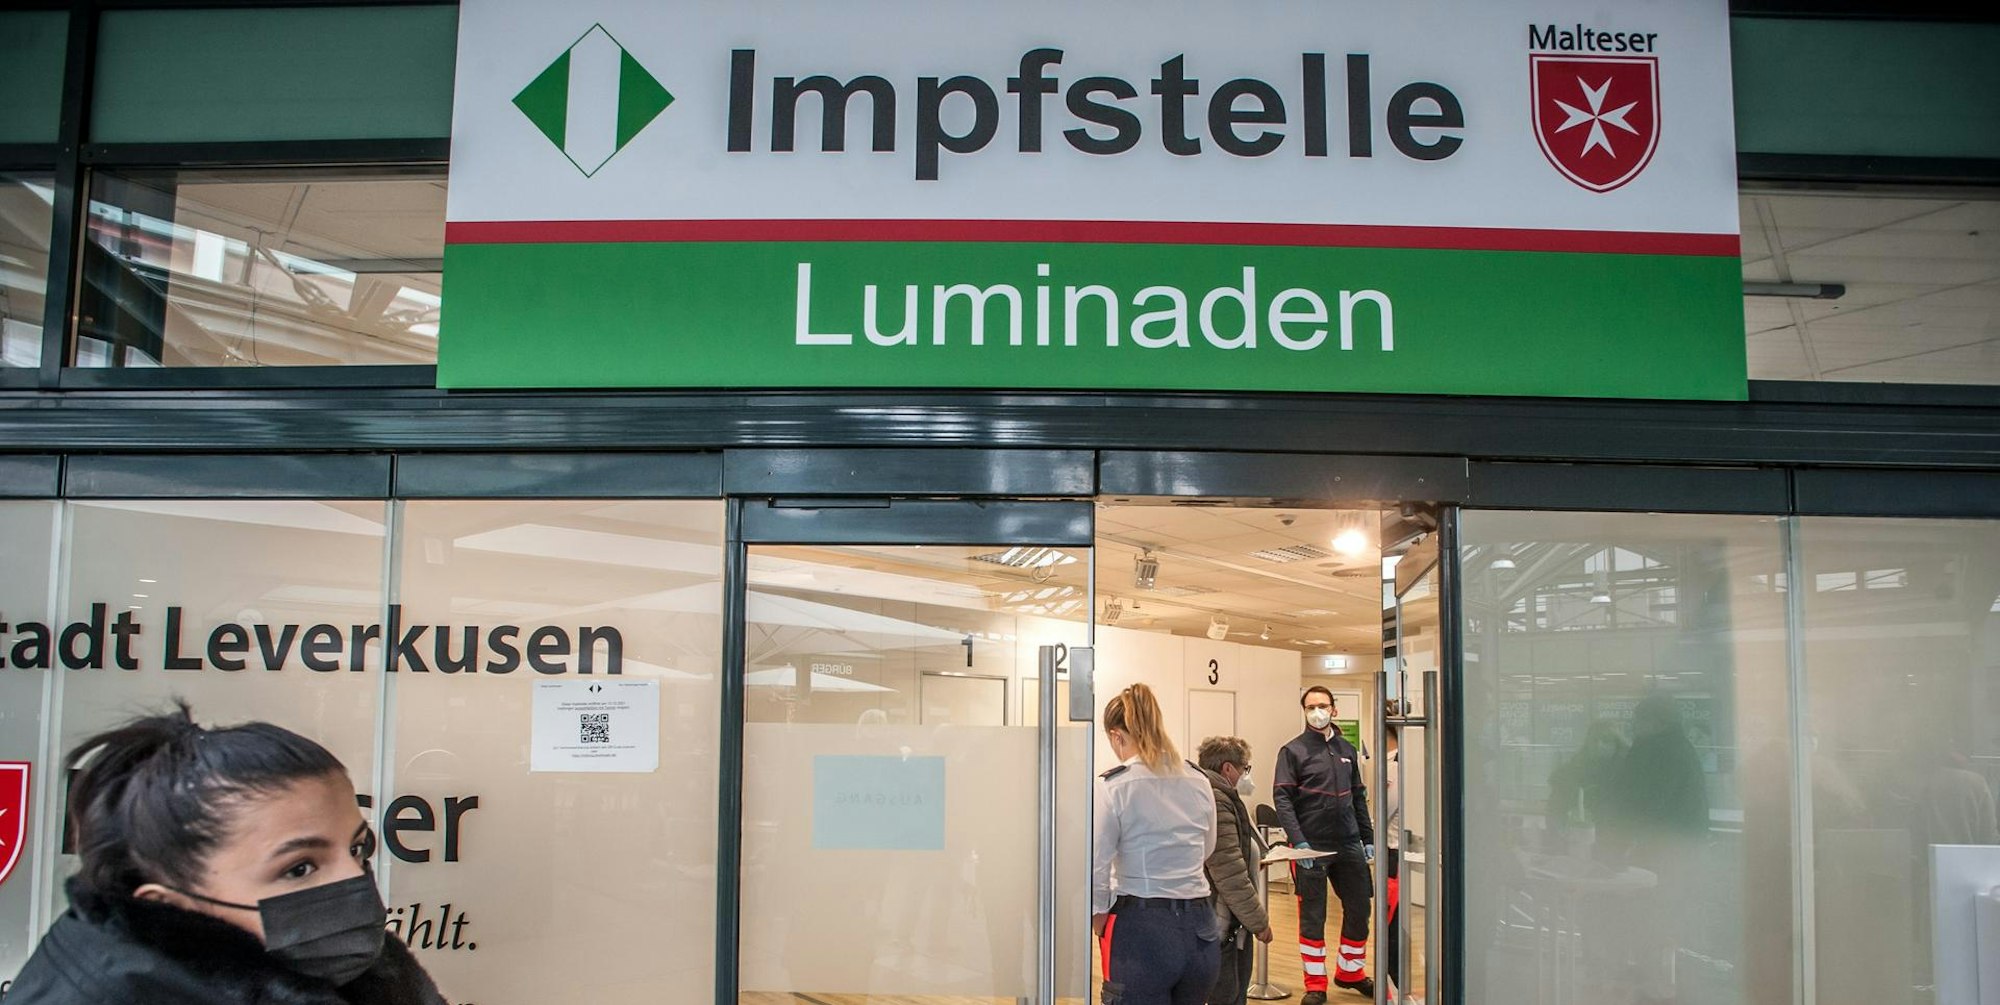 Impfstelle Luminaden Leverkusen (1)